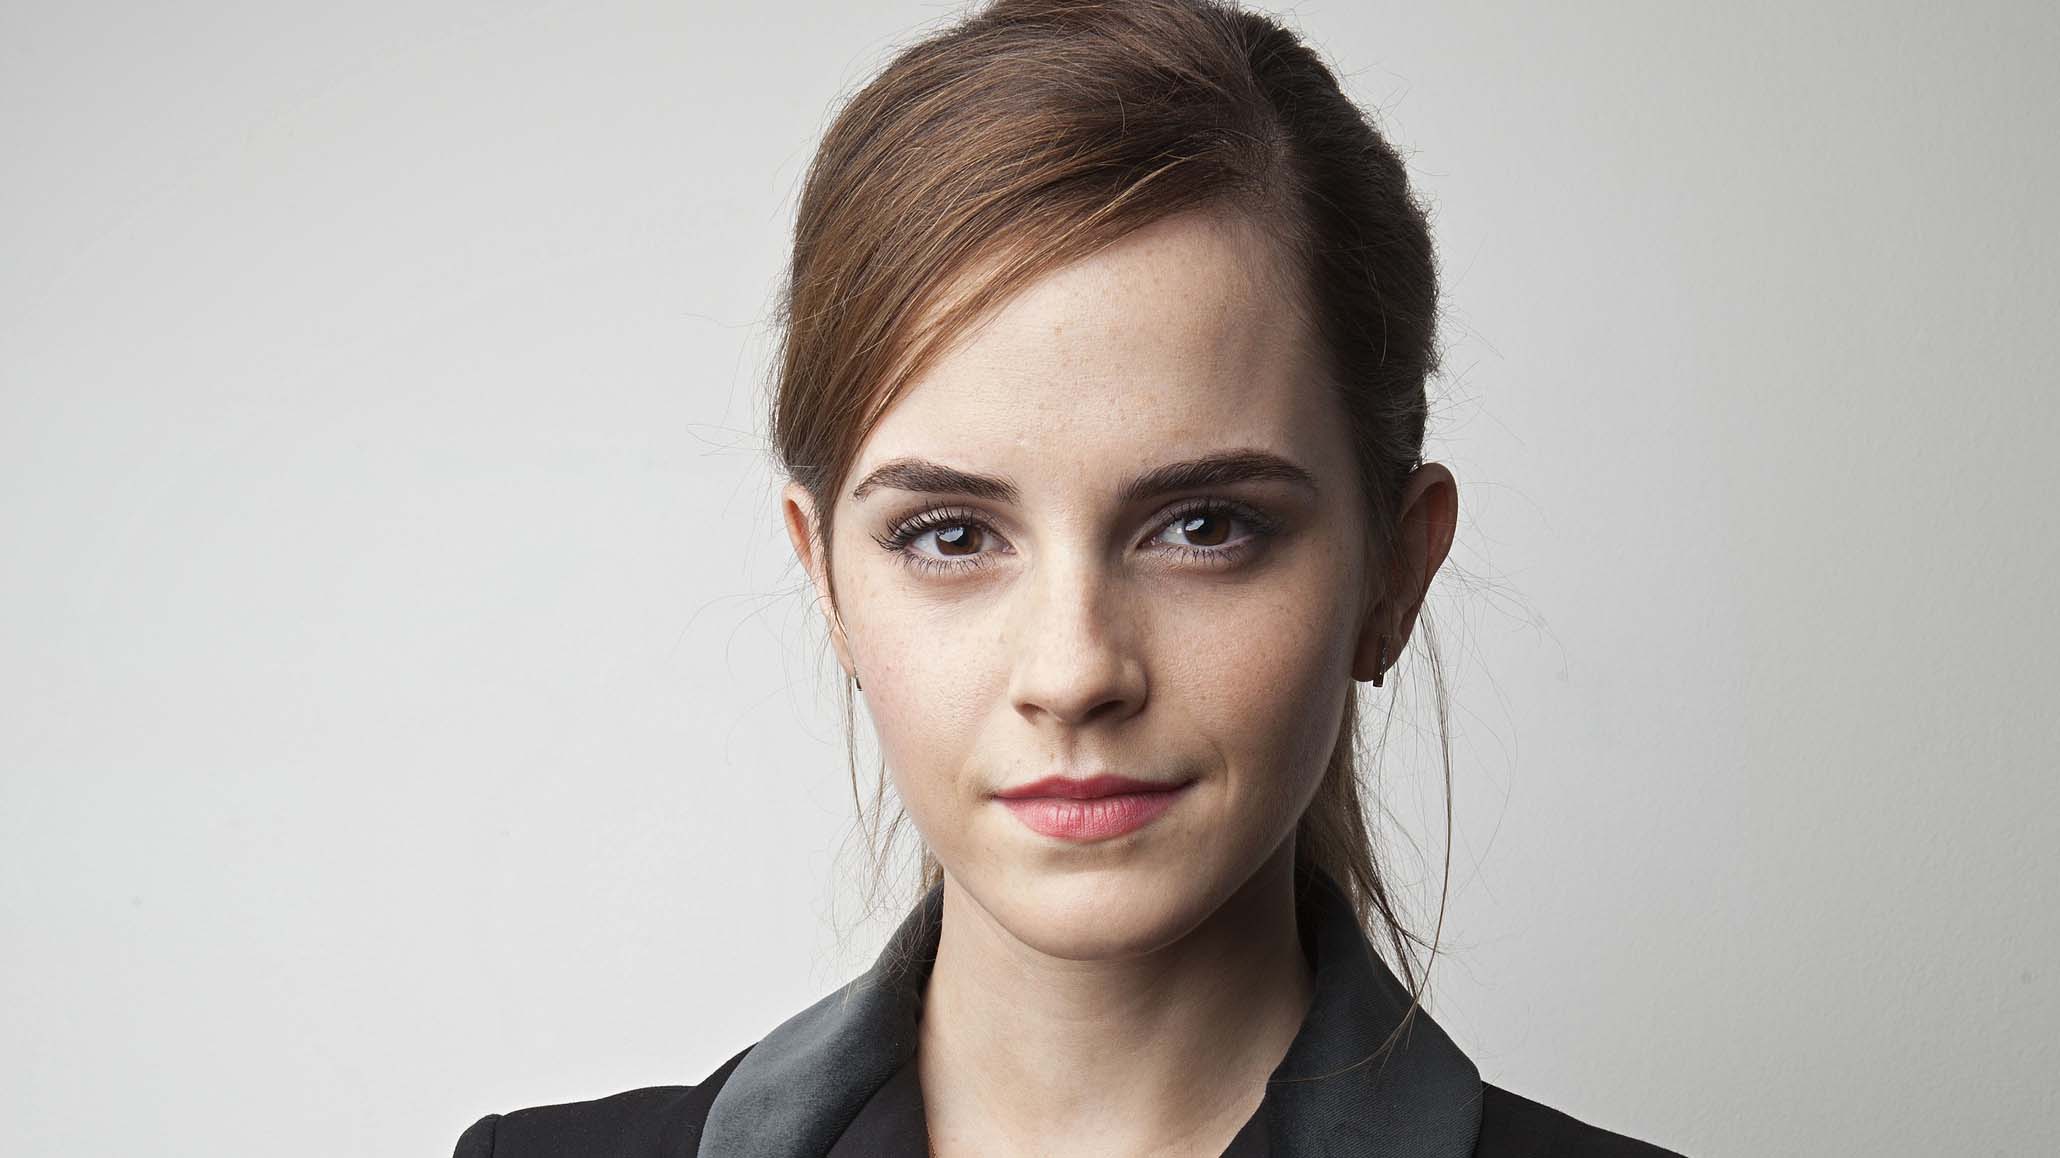 Harry Potter: Especial admite troca de foto de Emma Watson